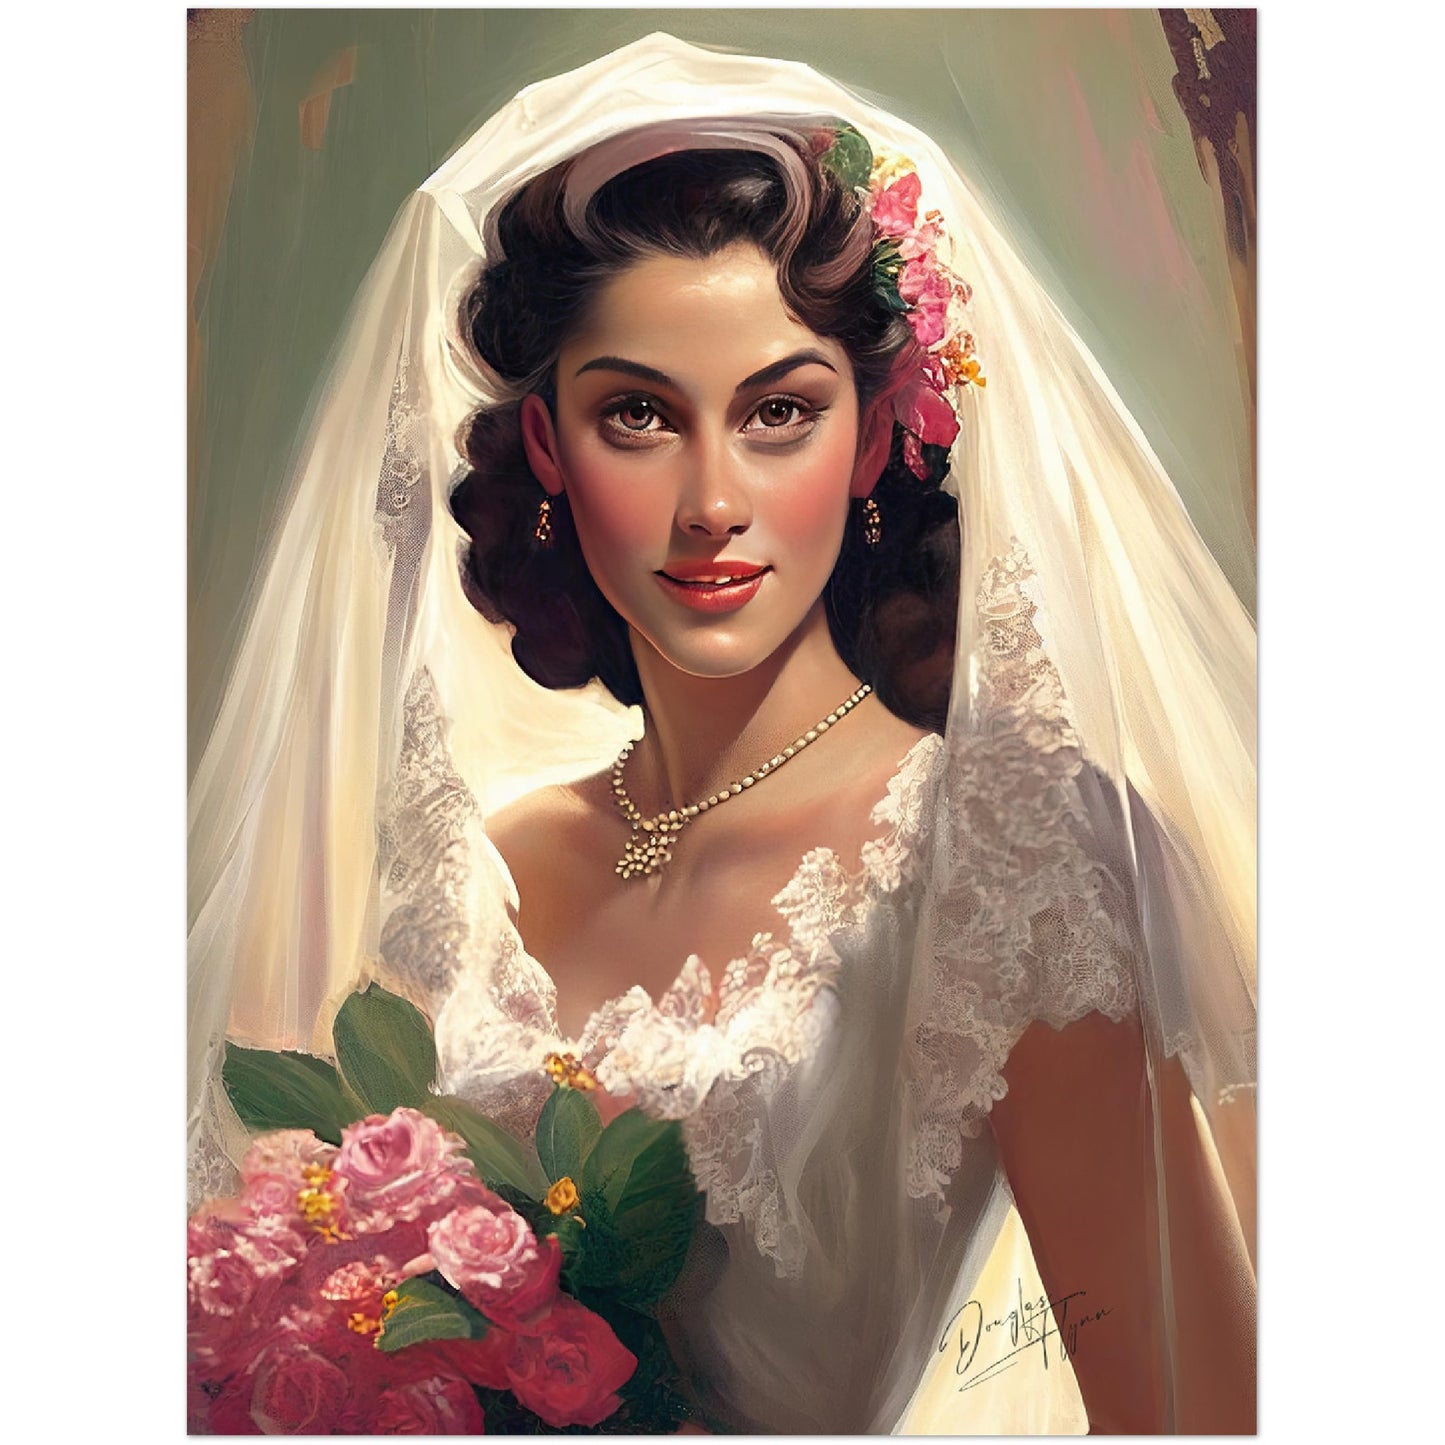 »Wedding Day Memories« retro poster